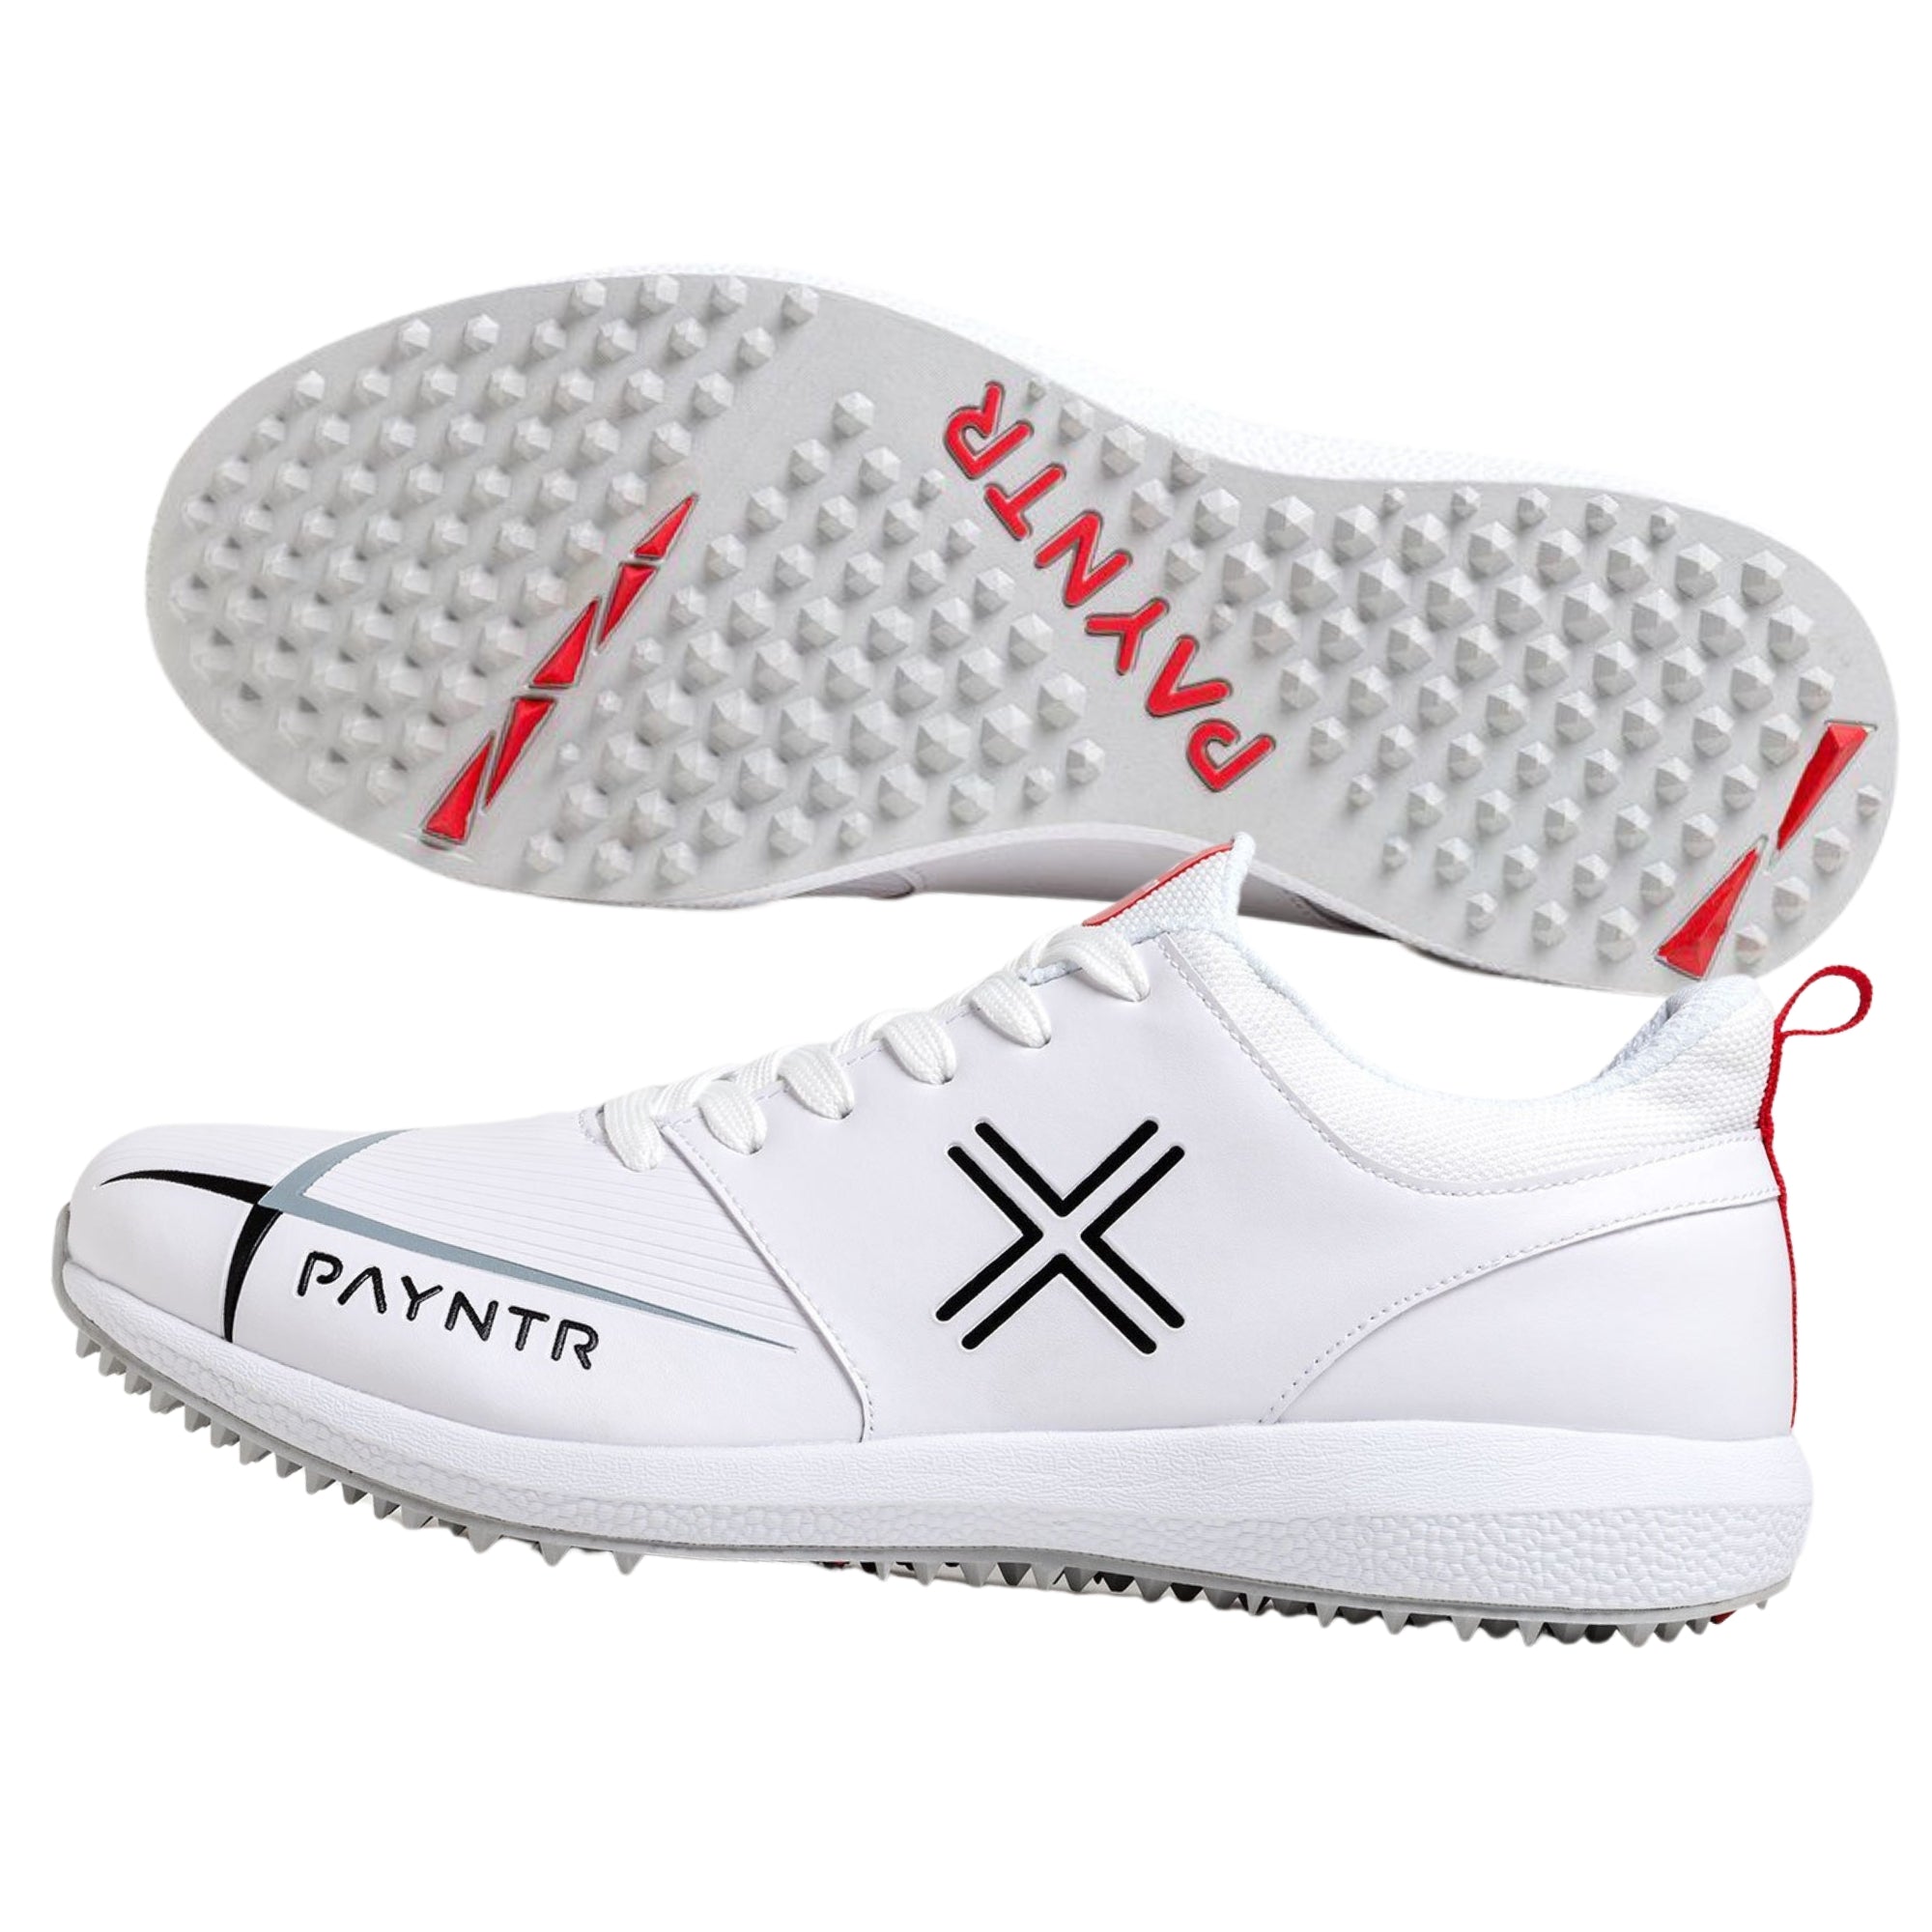 Payntr Cricket Shoes, Model V Pimple - White